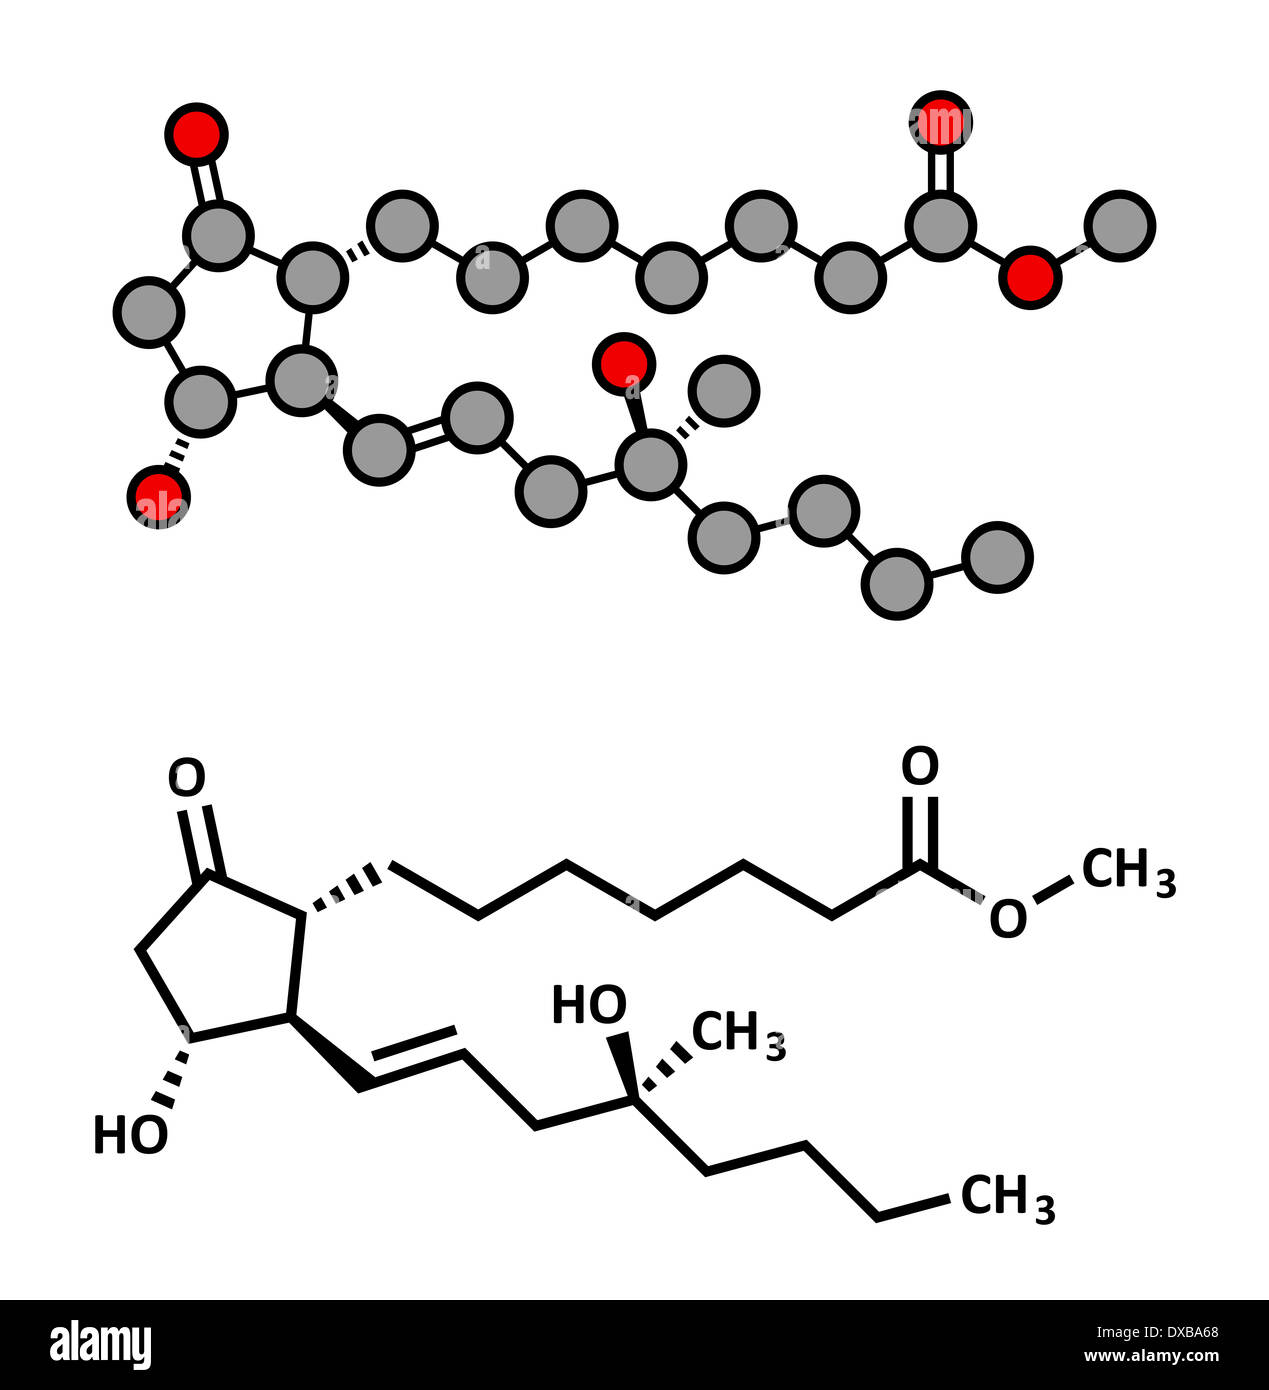 Misoprostol abortion inducing drug molecule. Prostaglandin E1 (PGE1) analogue also used to treat missed miscarriage, etc Stock Photo